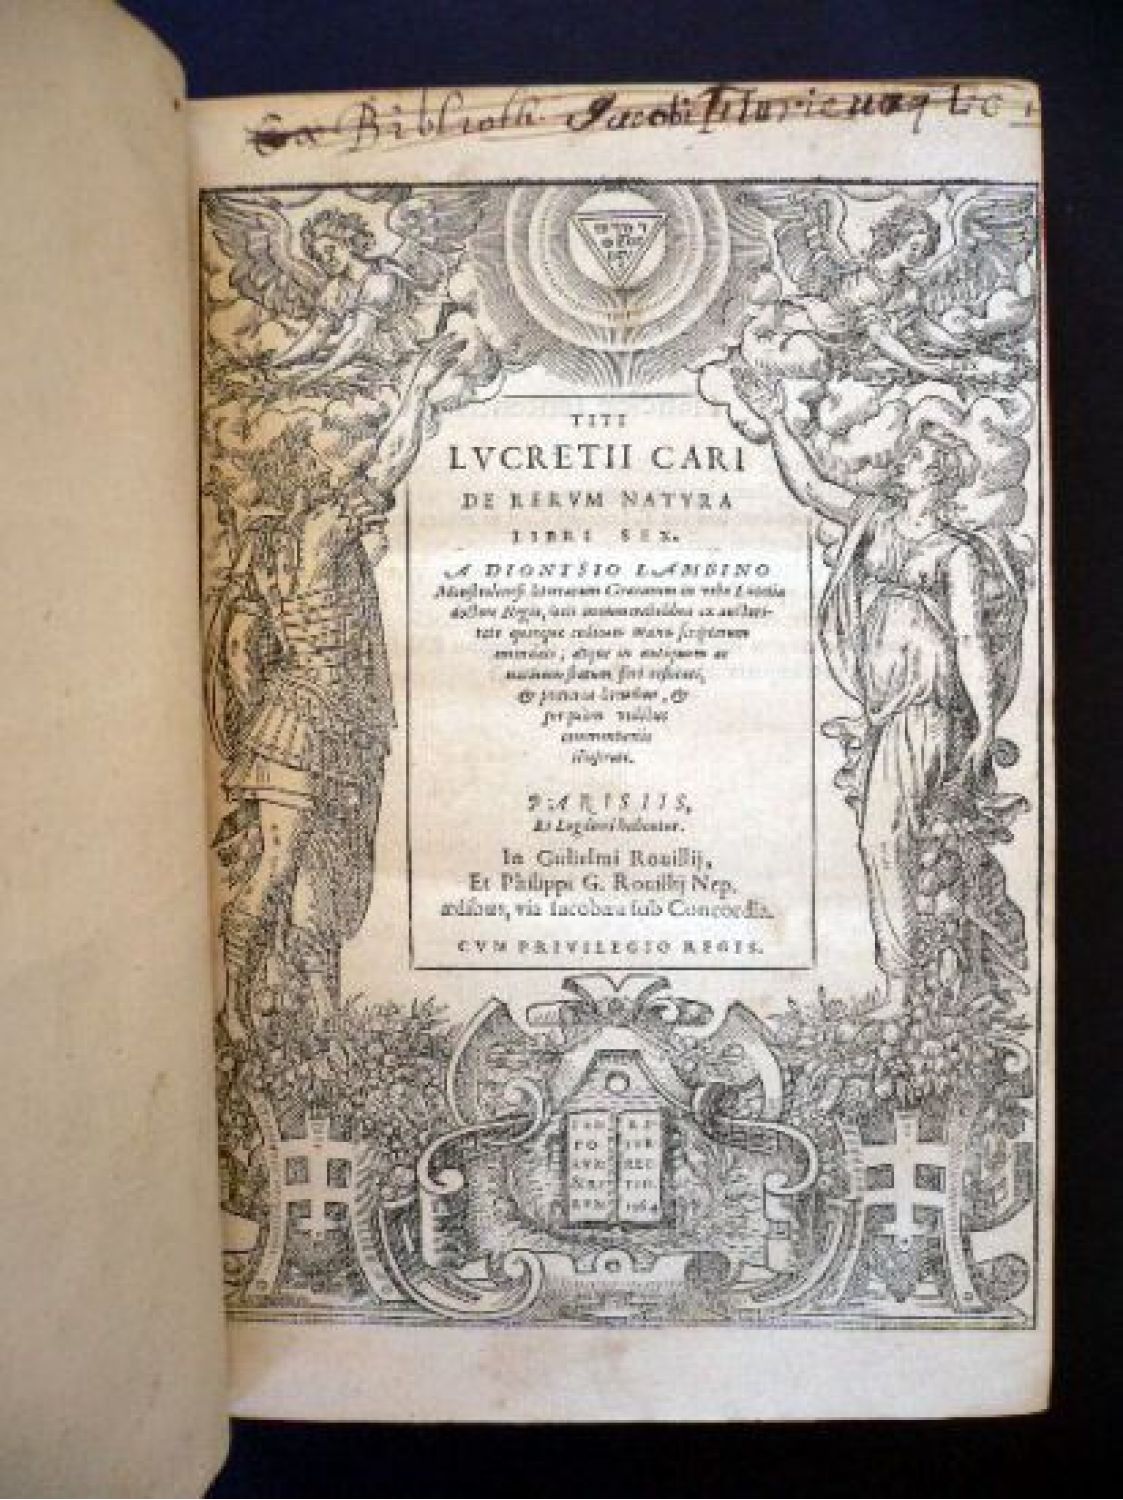 LUCRECE : De rerum natura libri sex - First edition 